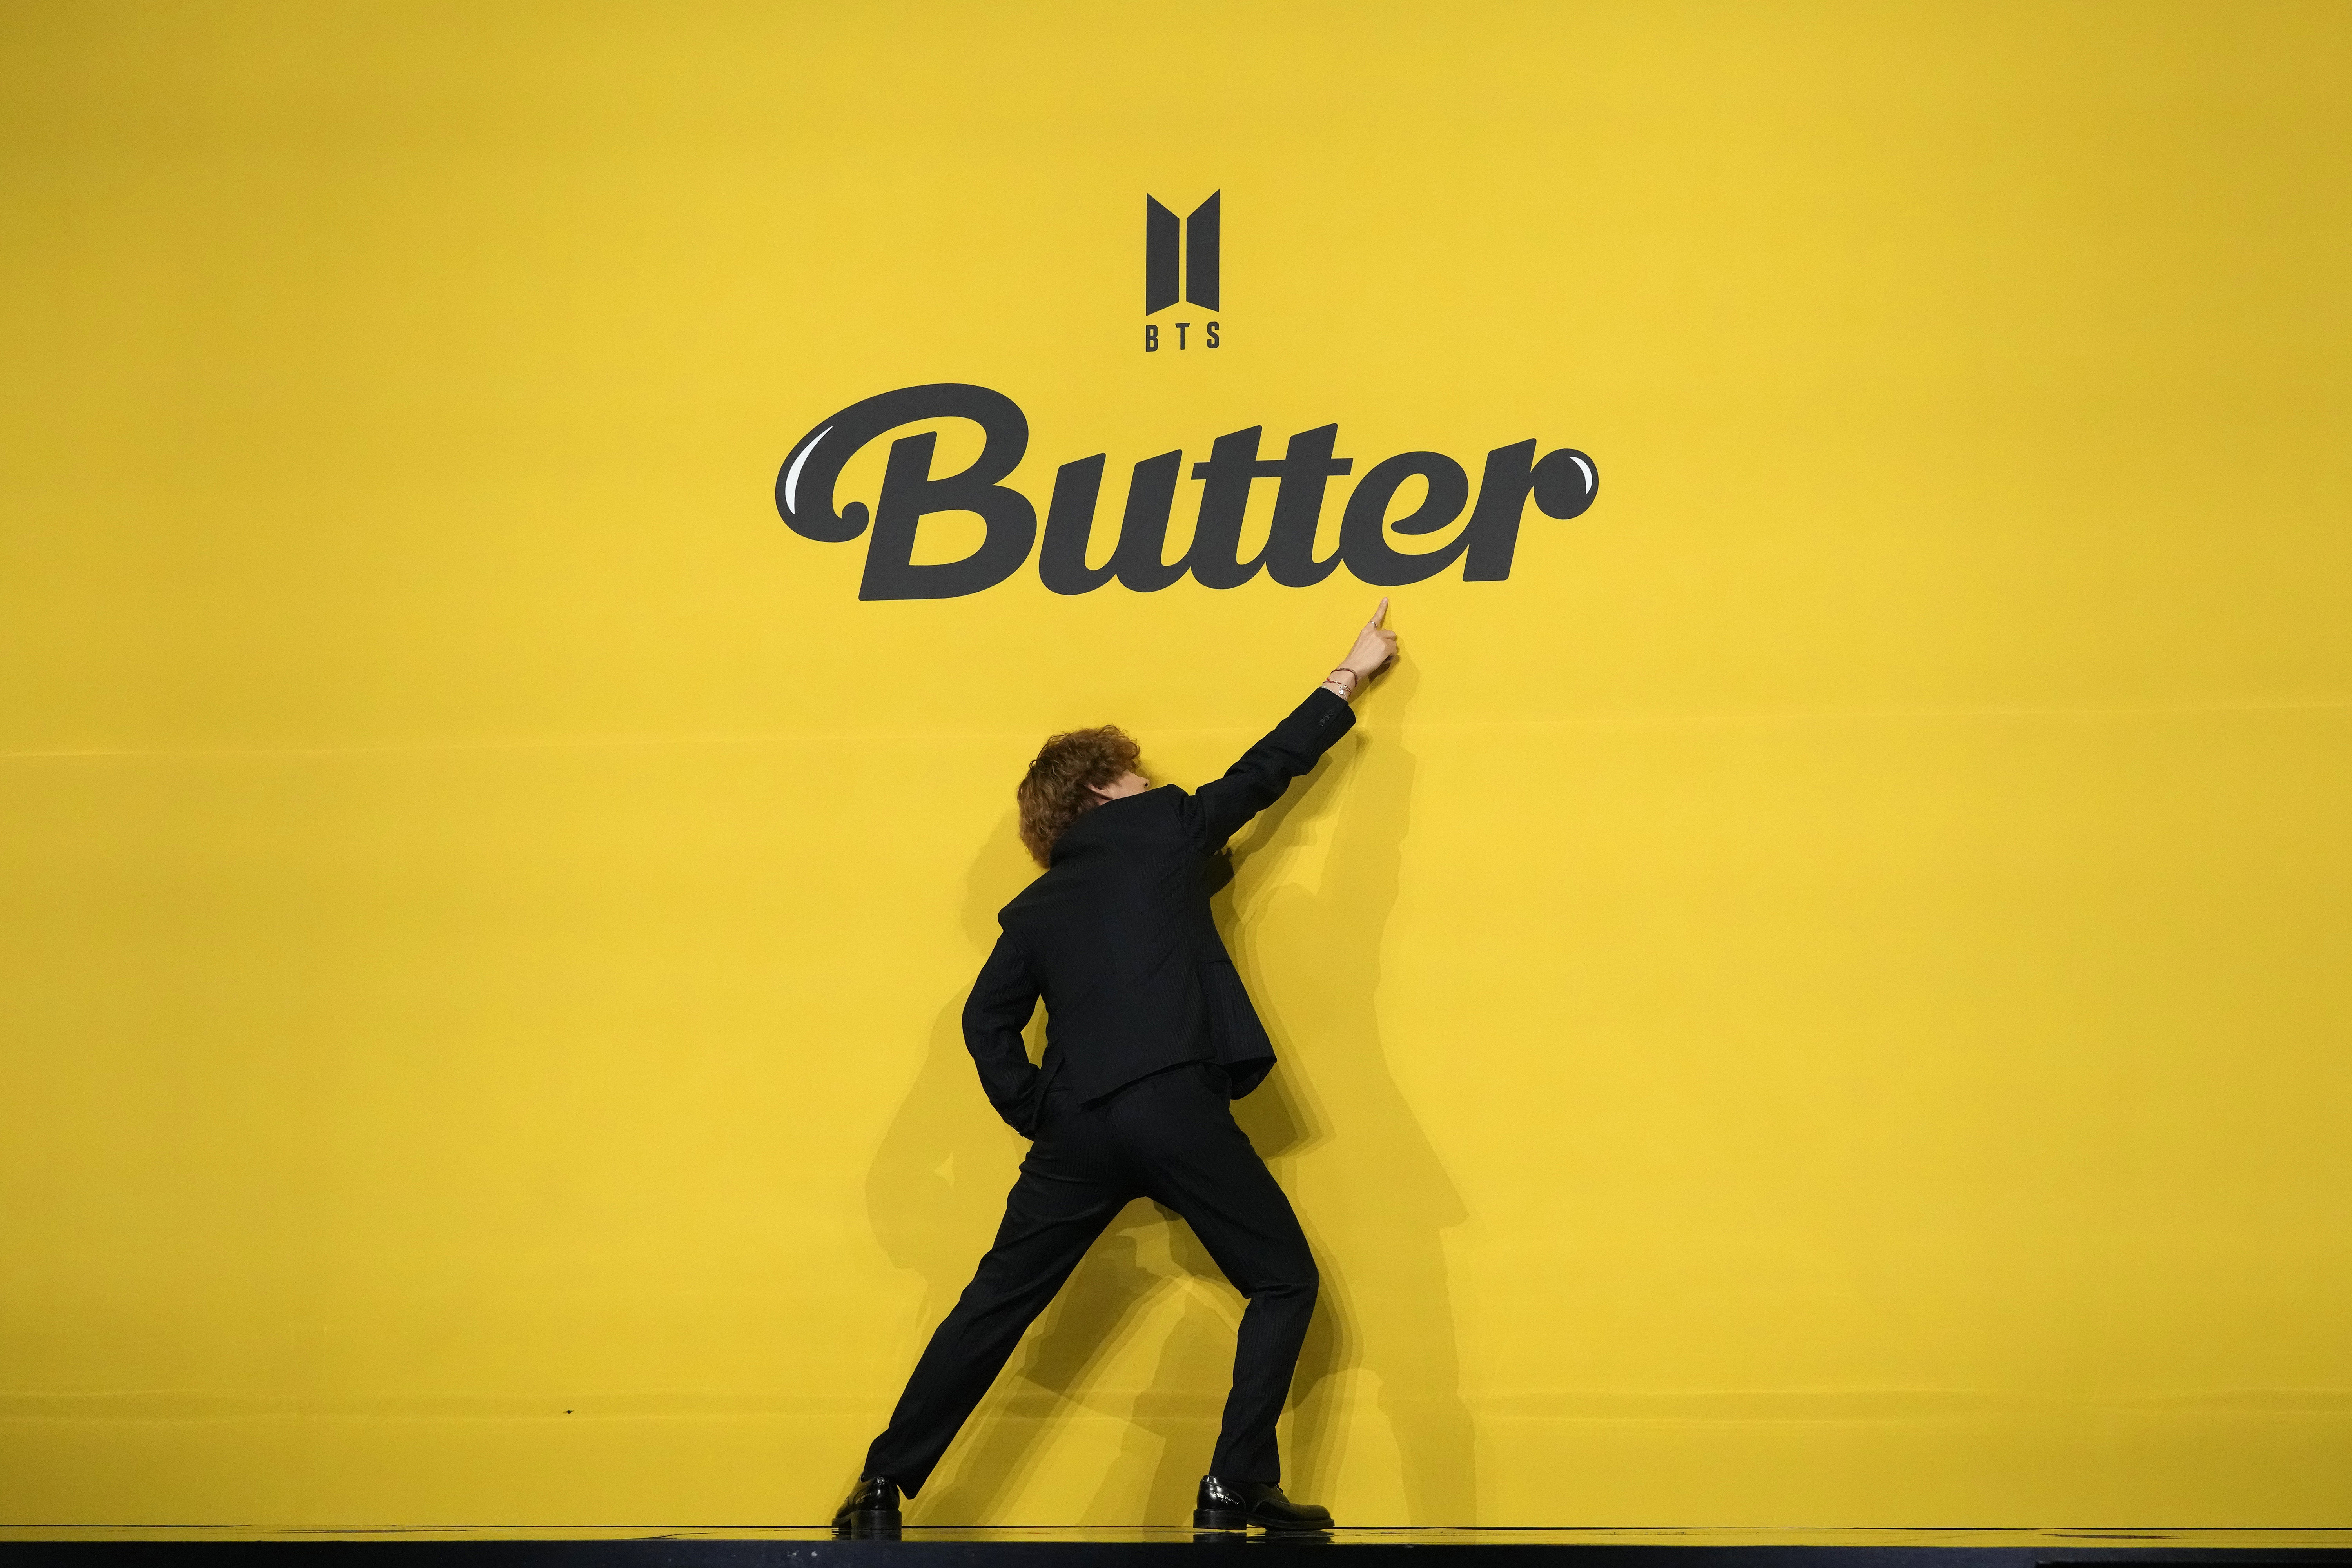 K-pop sensation BTS releases new summer single 'Butter